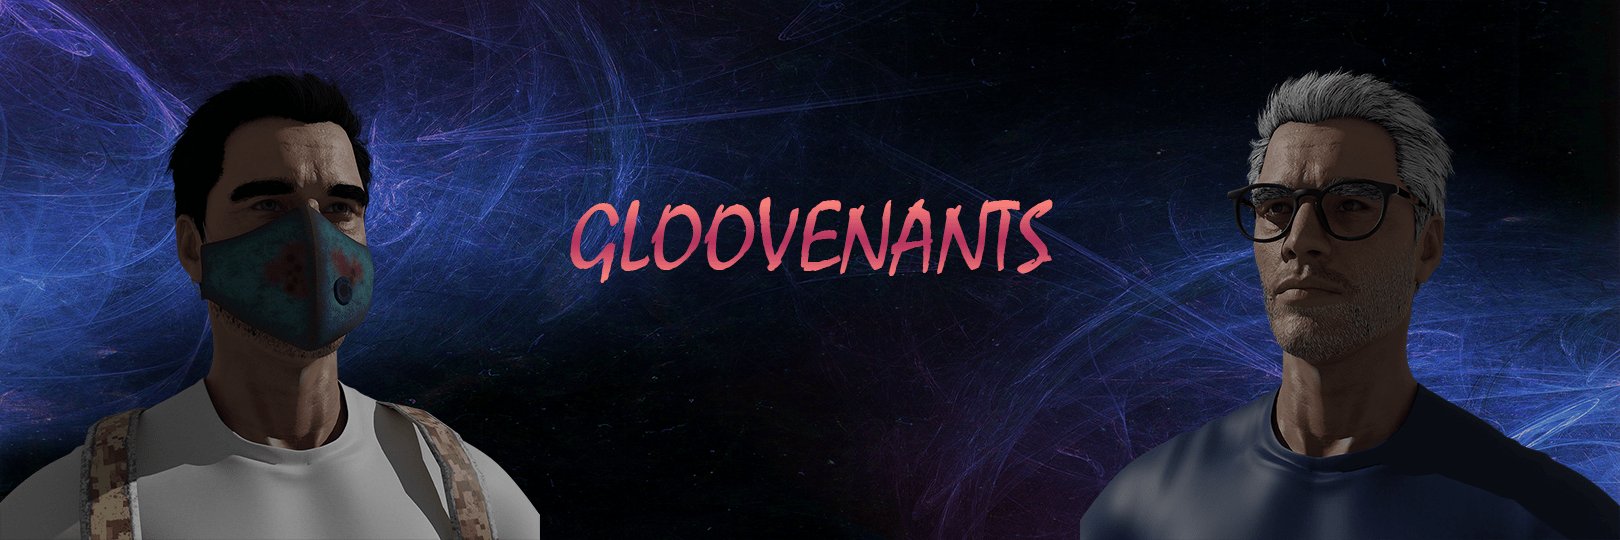 Gloovenants